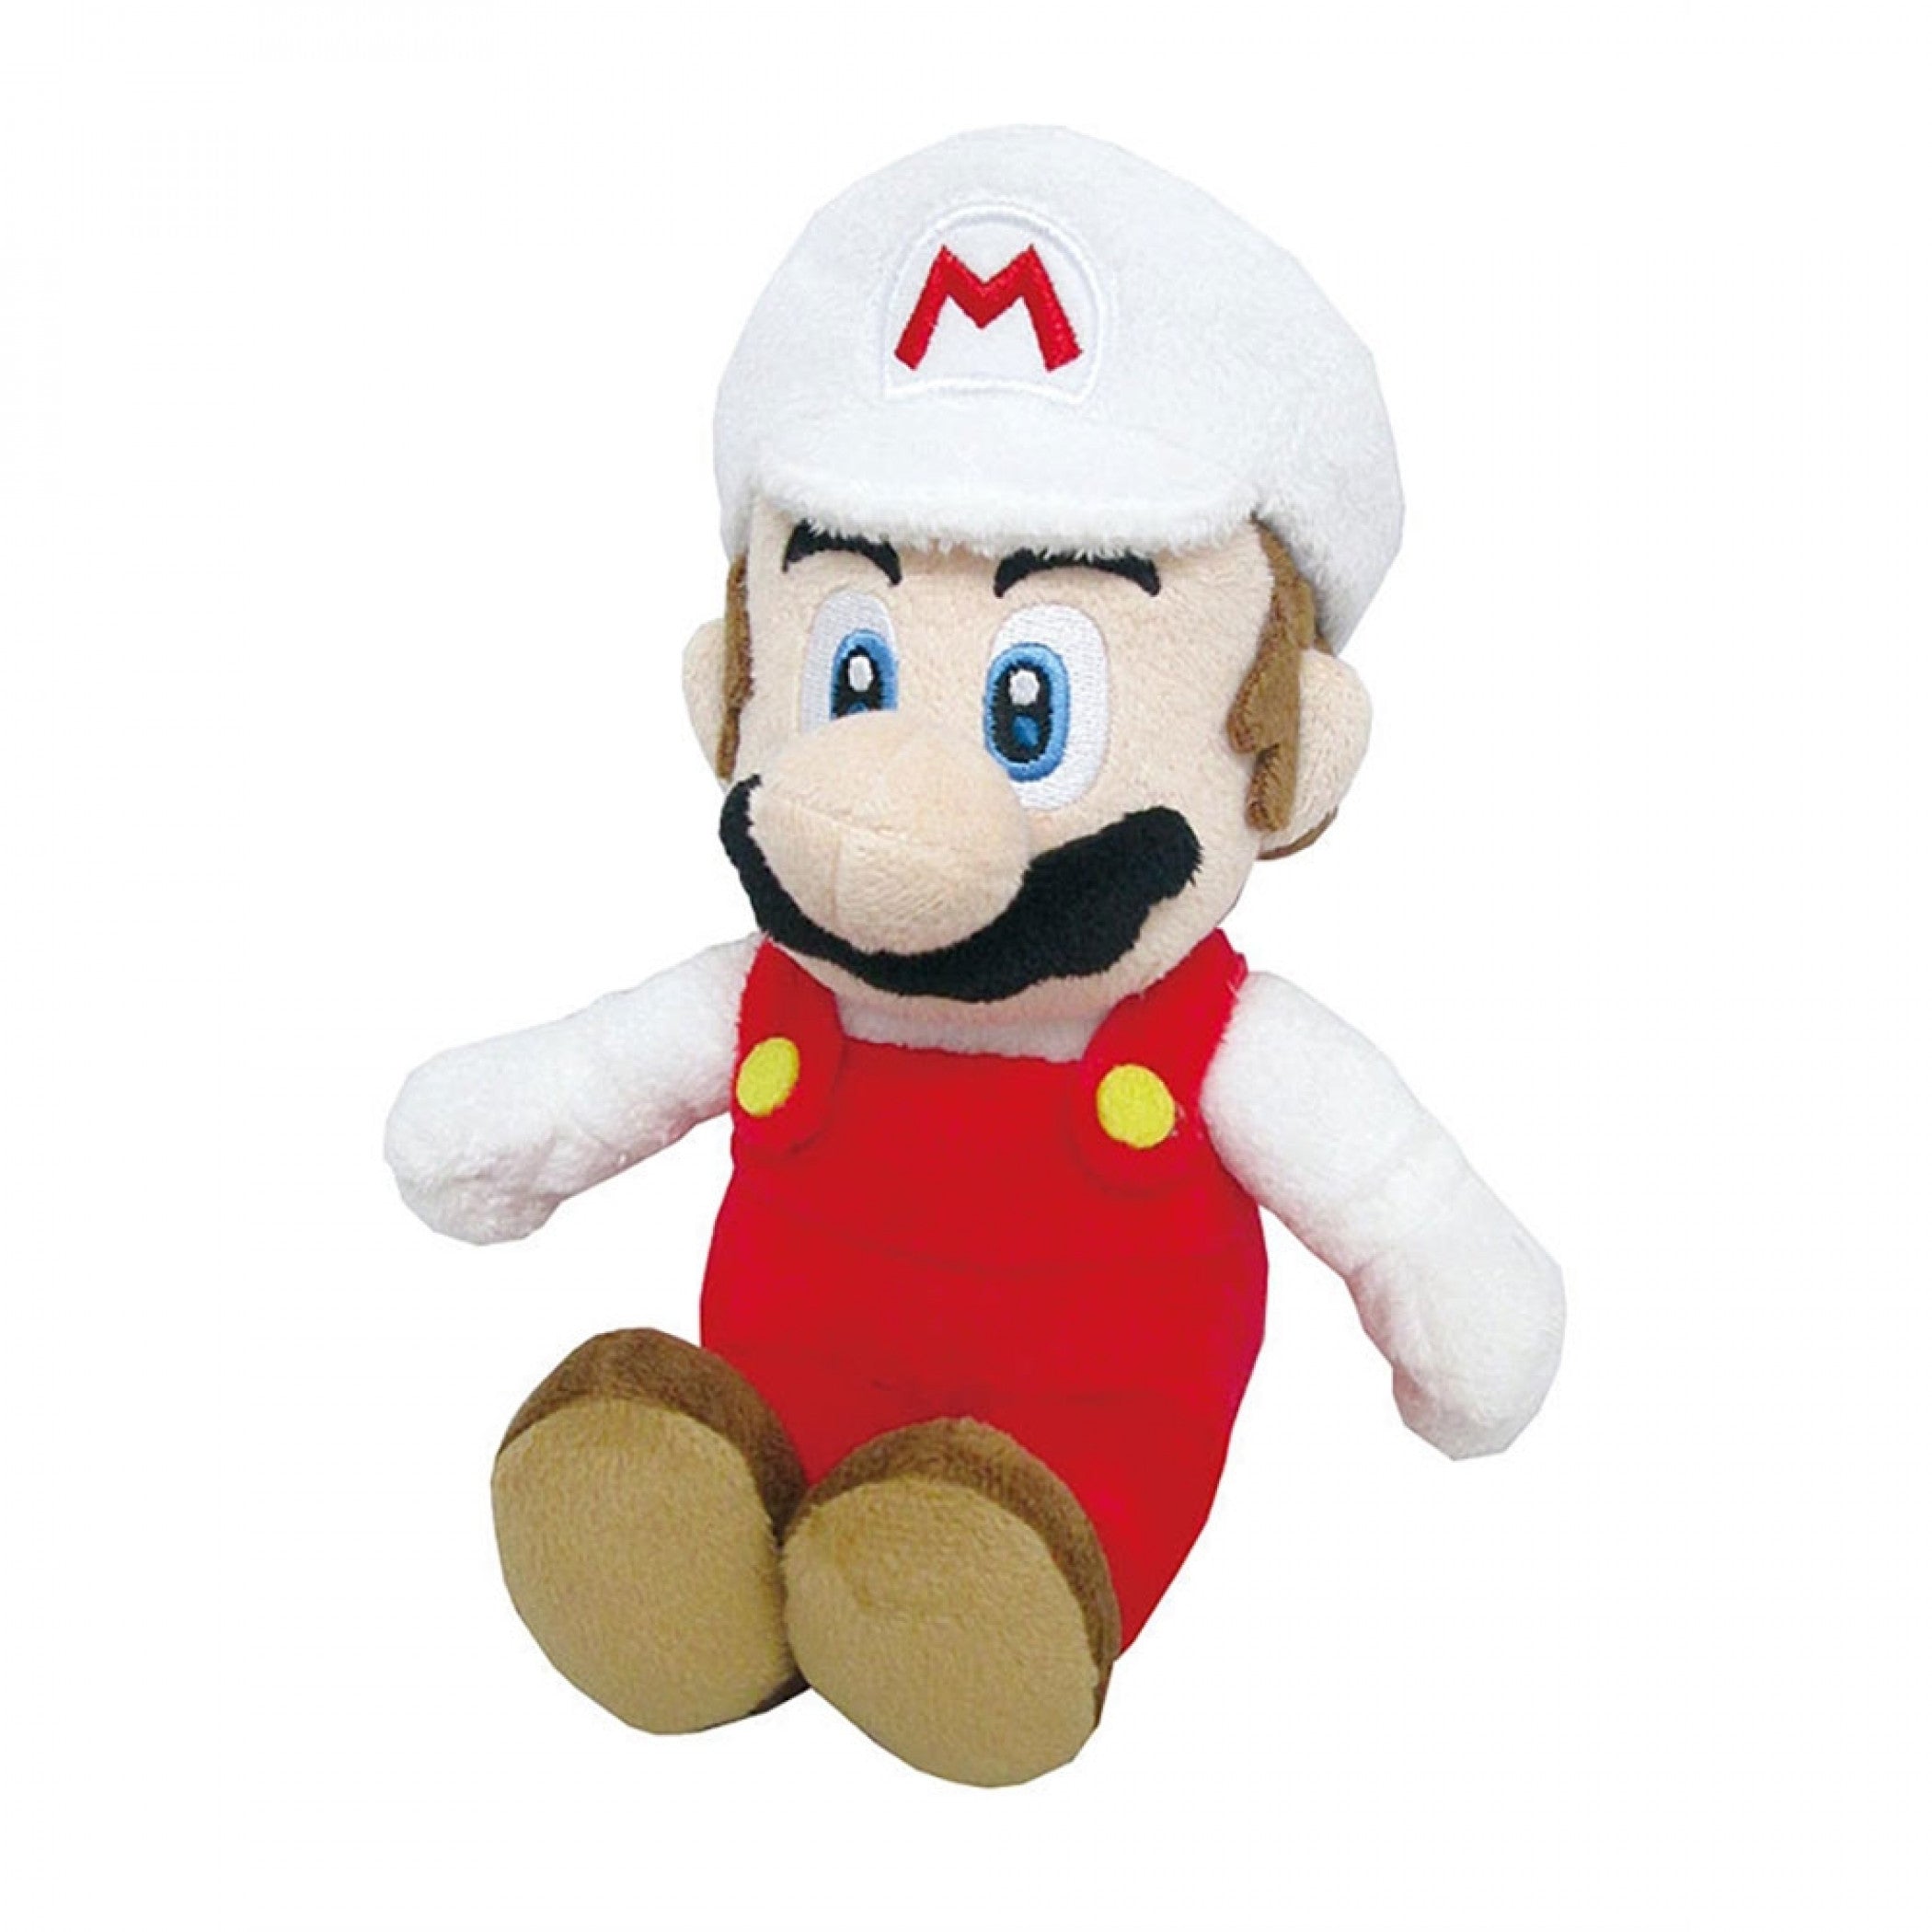 Nintendo Super Mario Bros. Fire Mario 10" Plush Toy